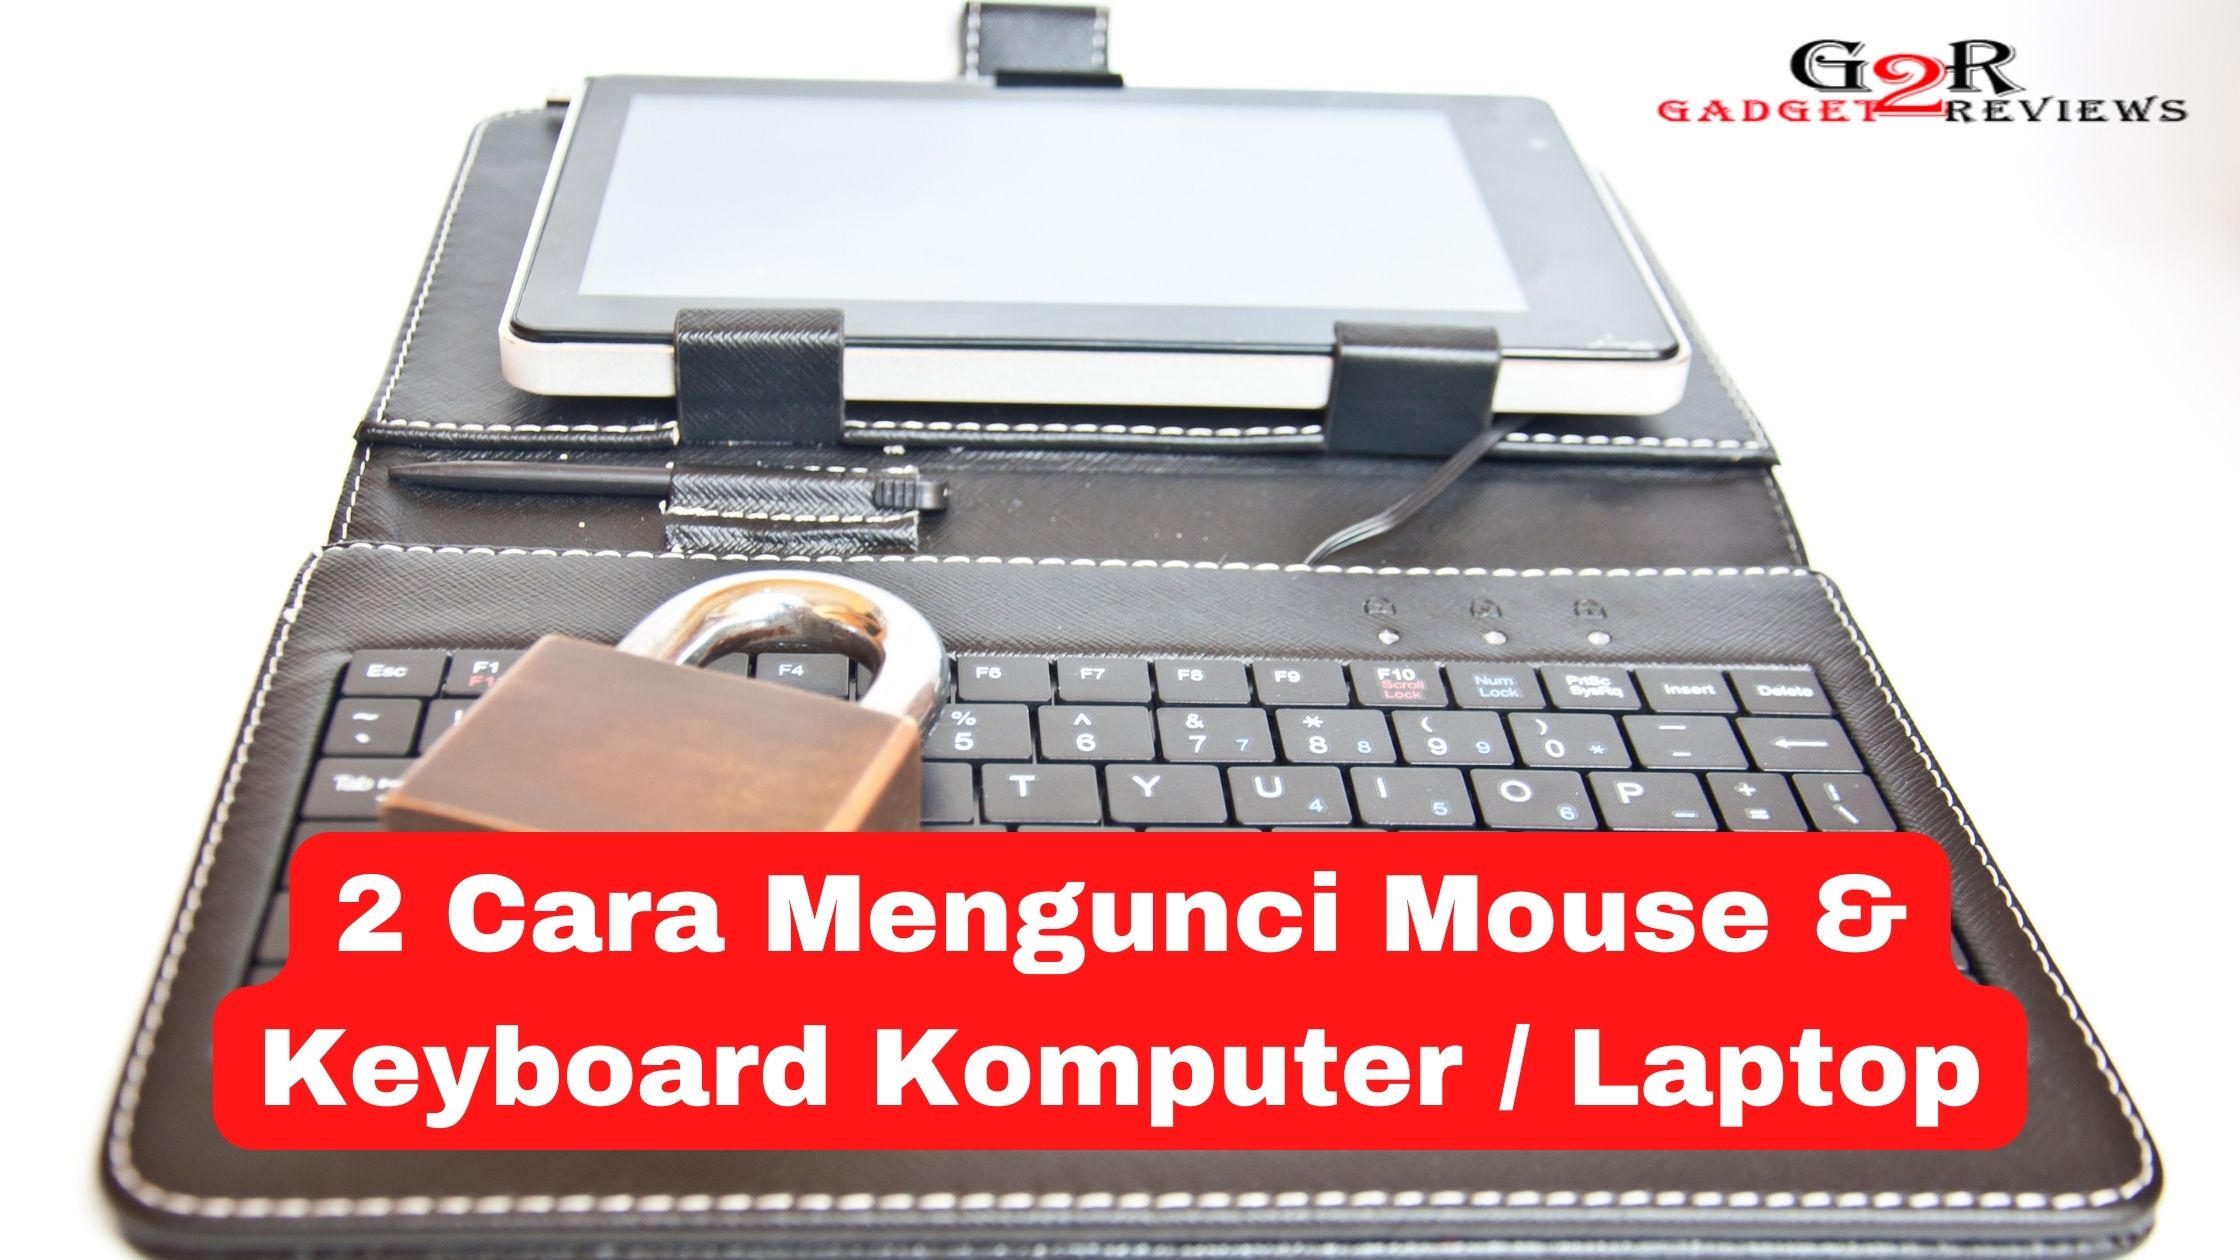 2 Cara Mengunci Mouse dan Keyboard Pada Komputer Laptop